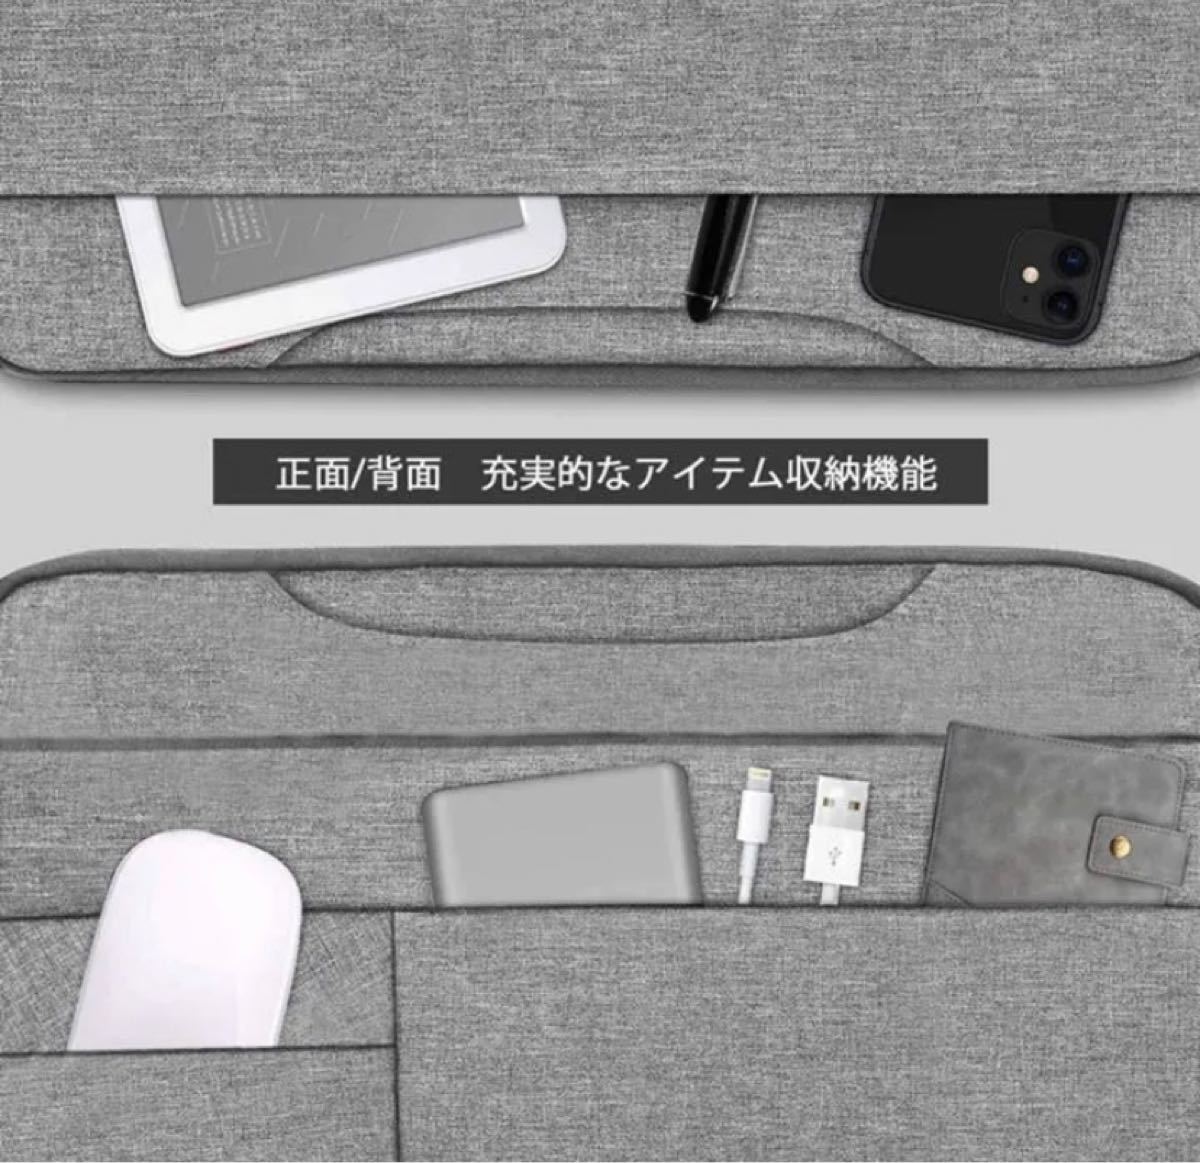 Macbook Pro/Macbook Air ノートPC ケース 軽量 耐衝撃